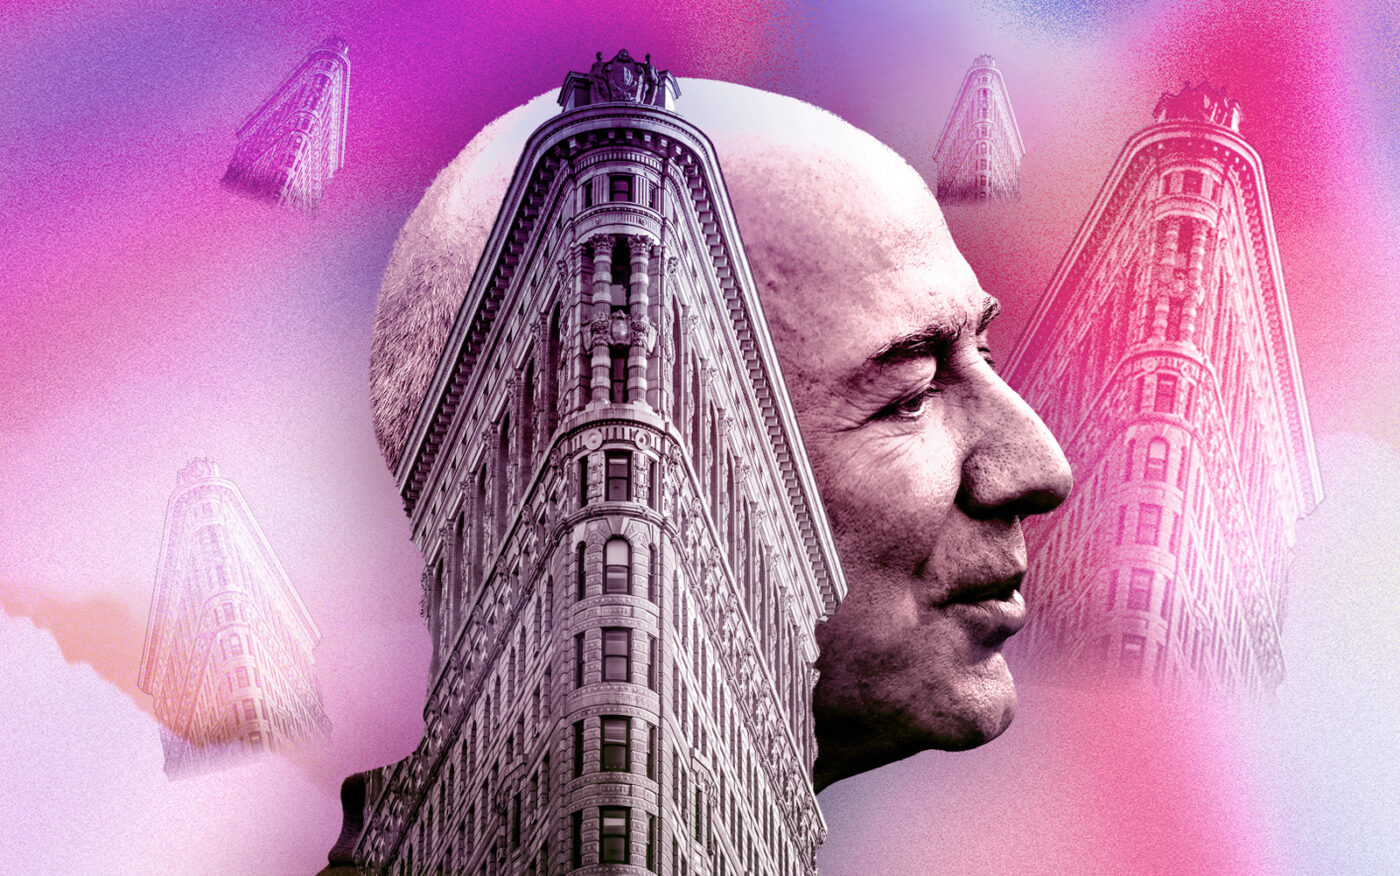 Photo illustration of the Flatiron Building and Jeff Bezos